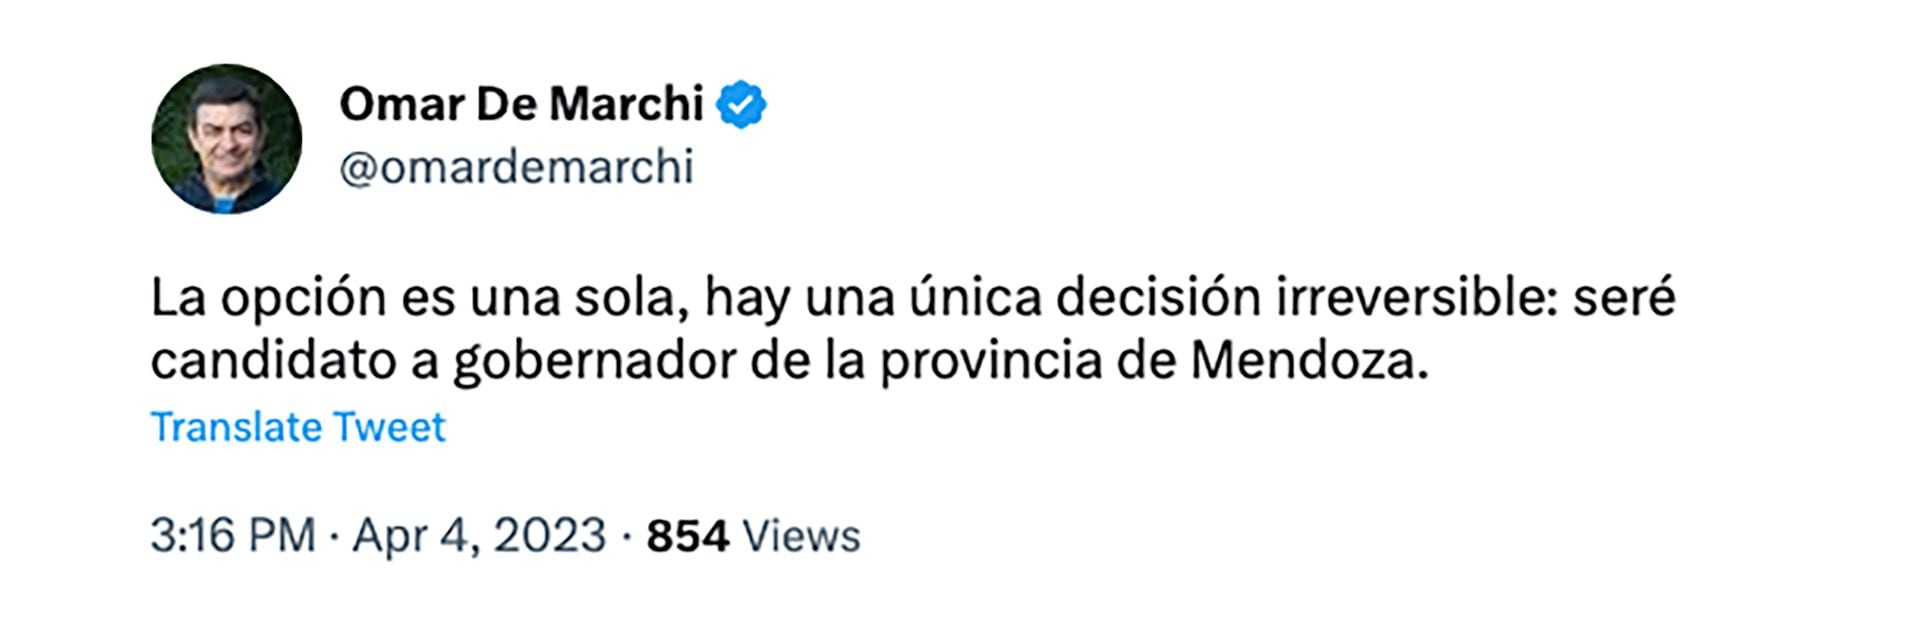 Omar De Marchi anunció que será candidato a gobernador de Mendoza